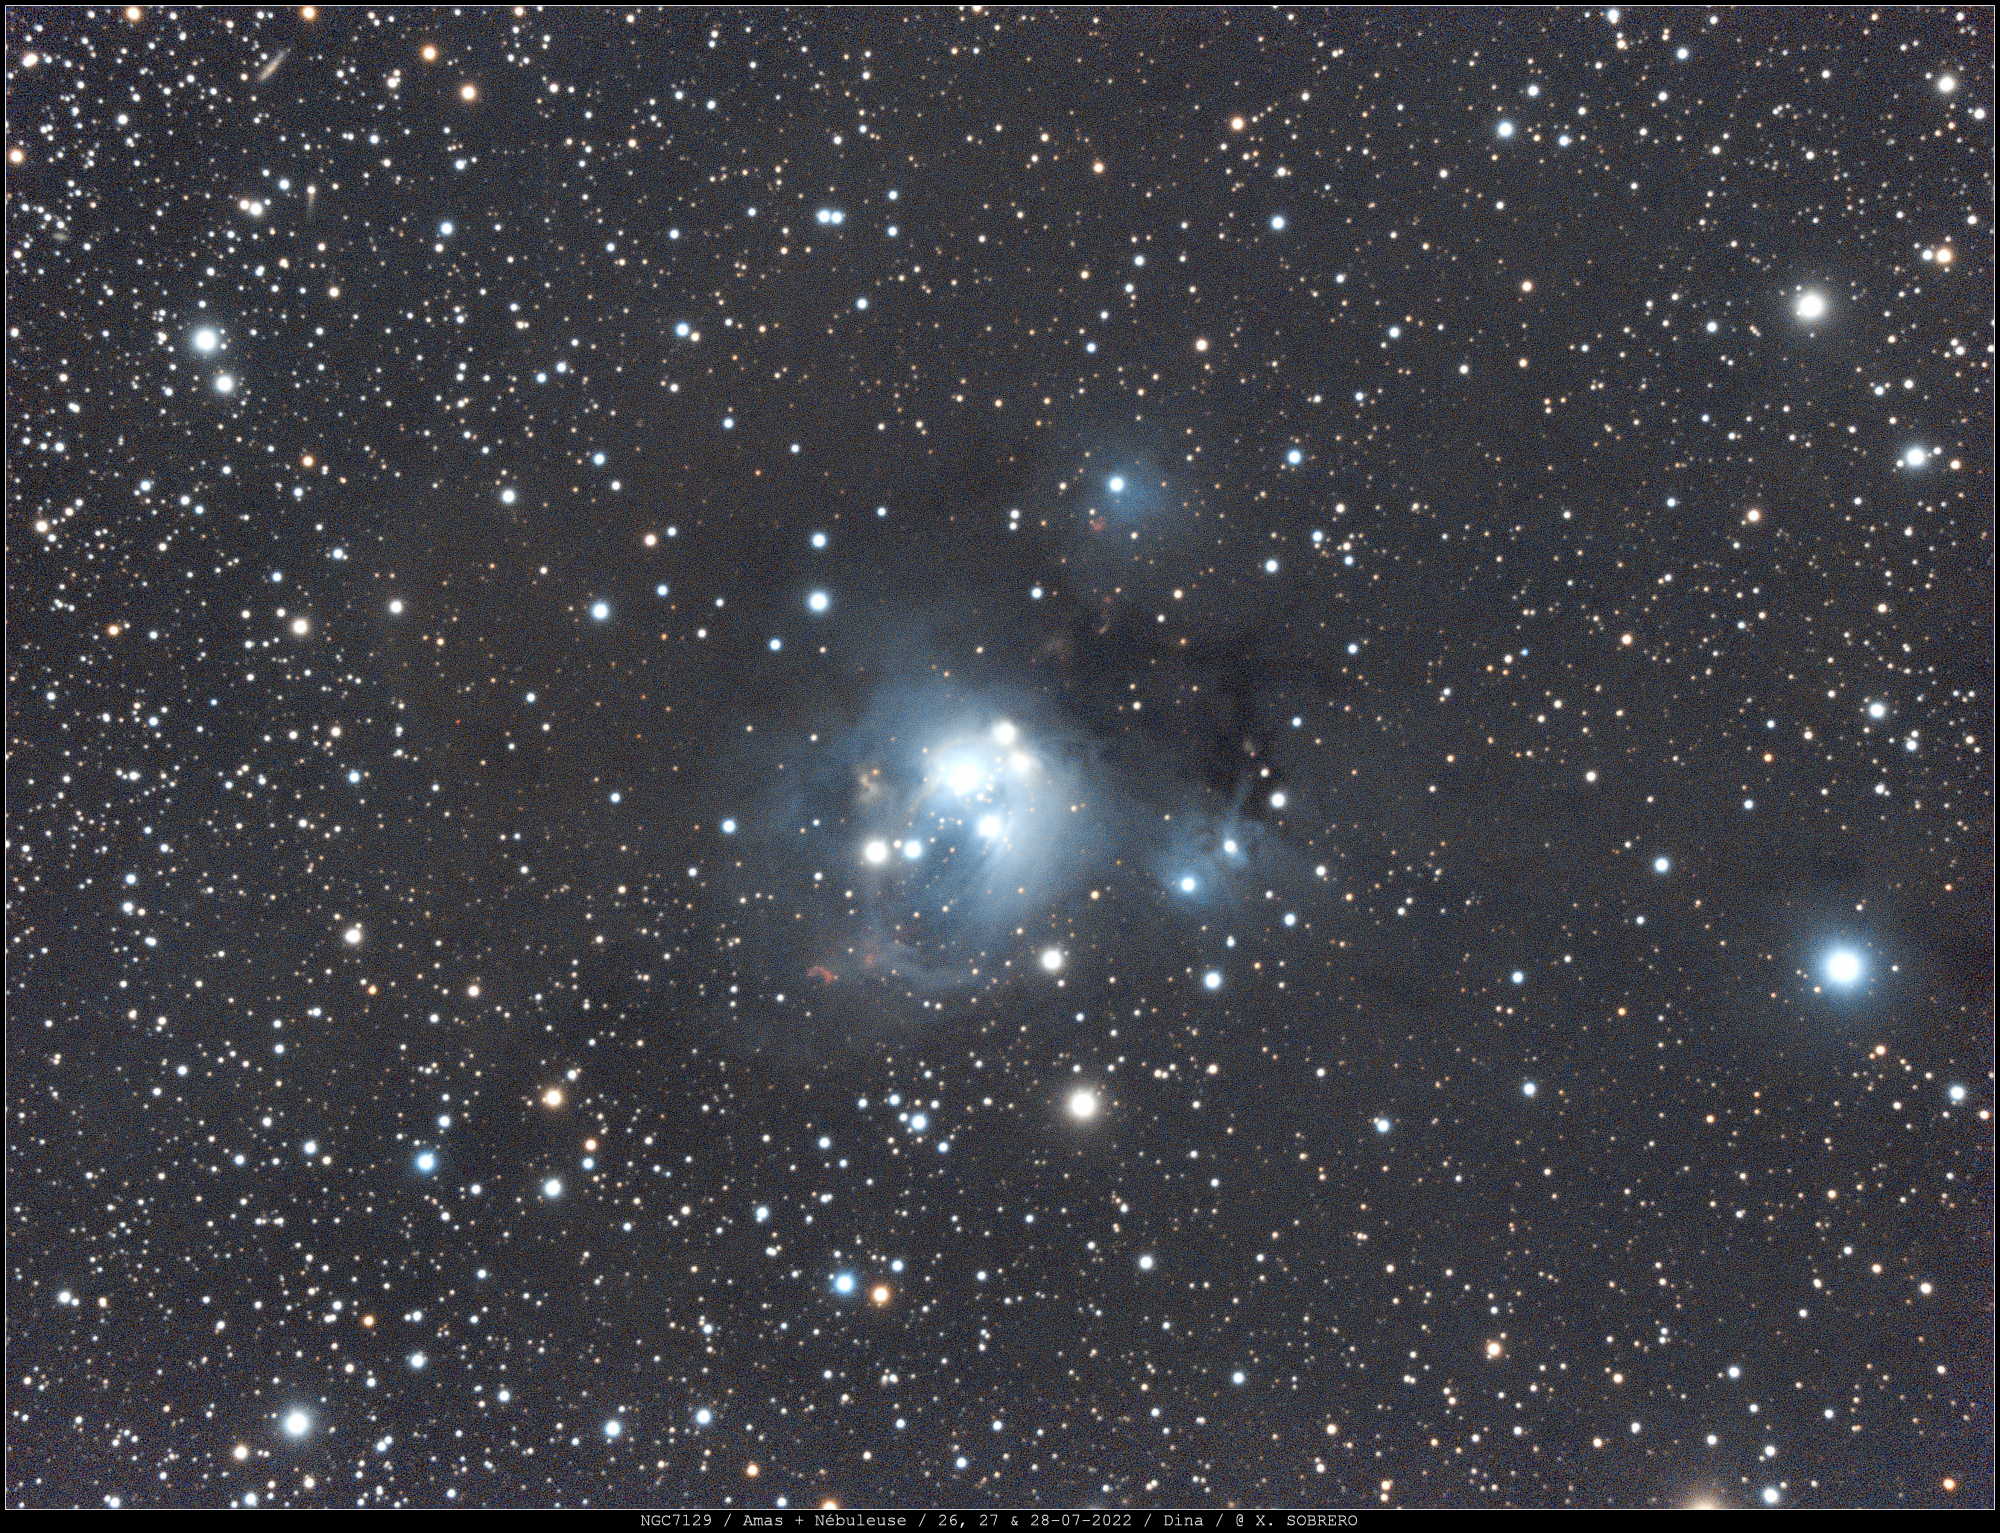 03_-_NGC7129_26_27_28-07-2022_SIRIL_GIMP_signee.thumb.jpg.6078b8349189230afcb10d66544c1d58.jpg